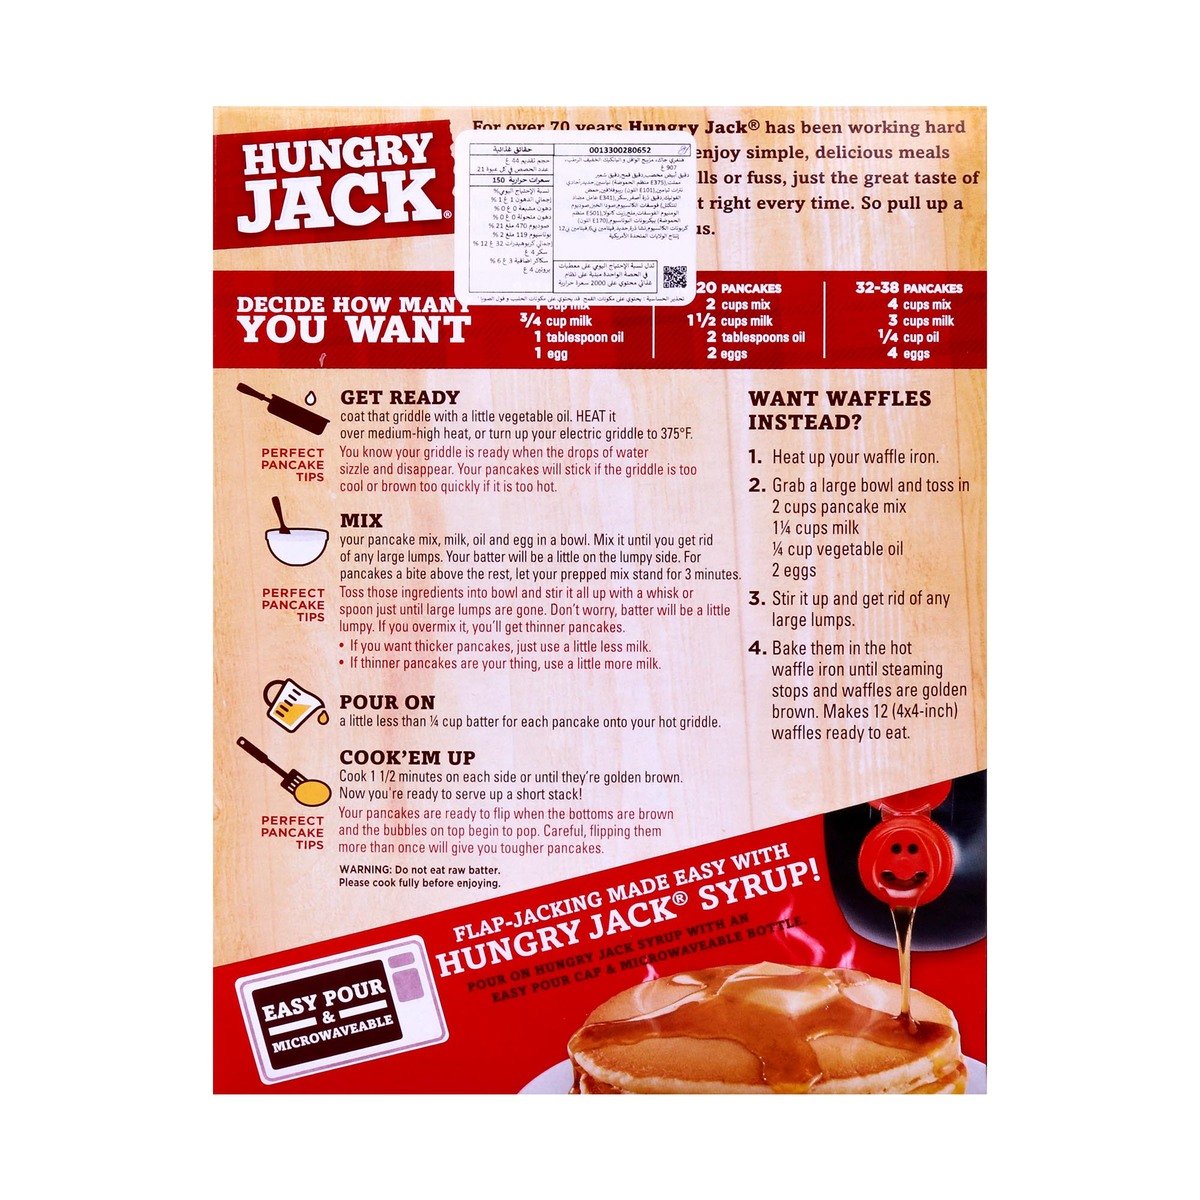 Hungry Jack Pancake & Waffle Mix Extra Light & Fluffy 907 g